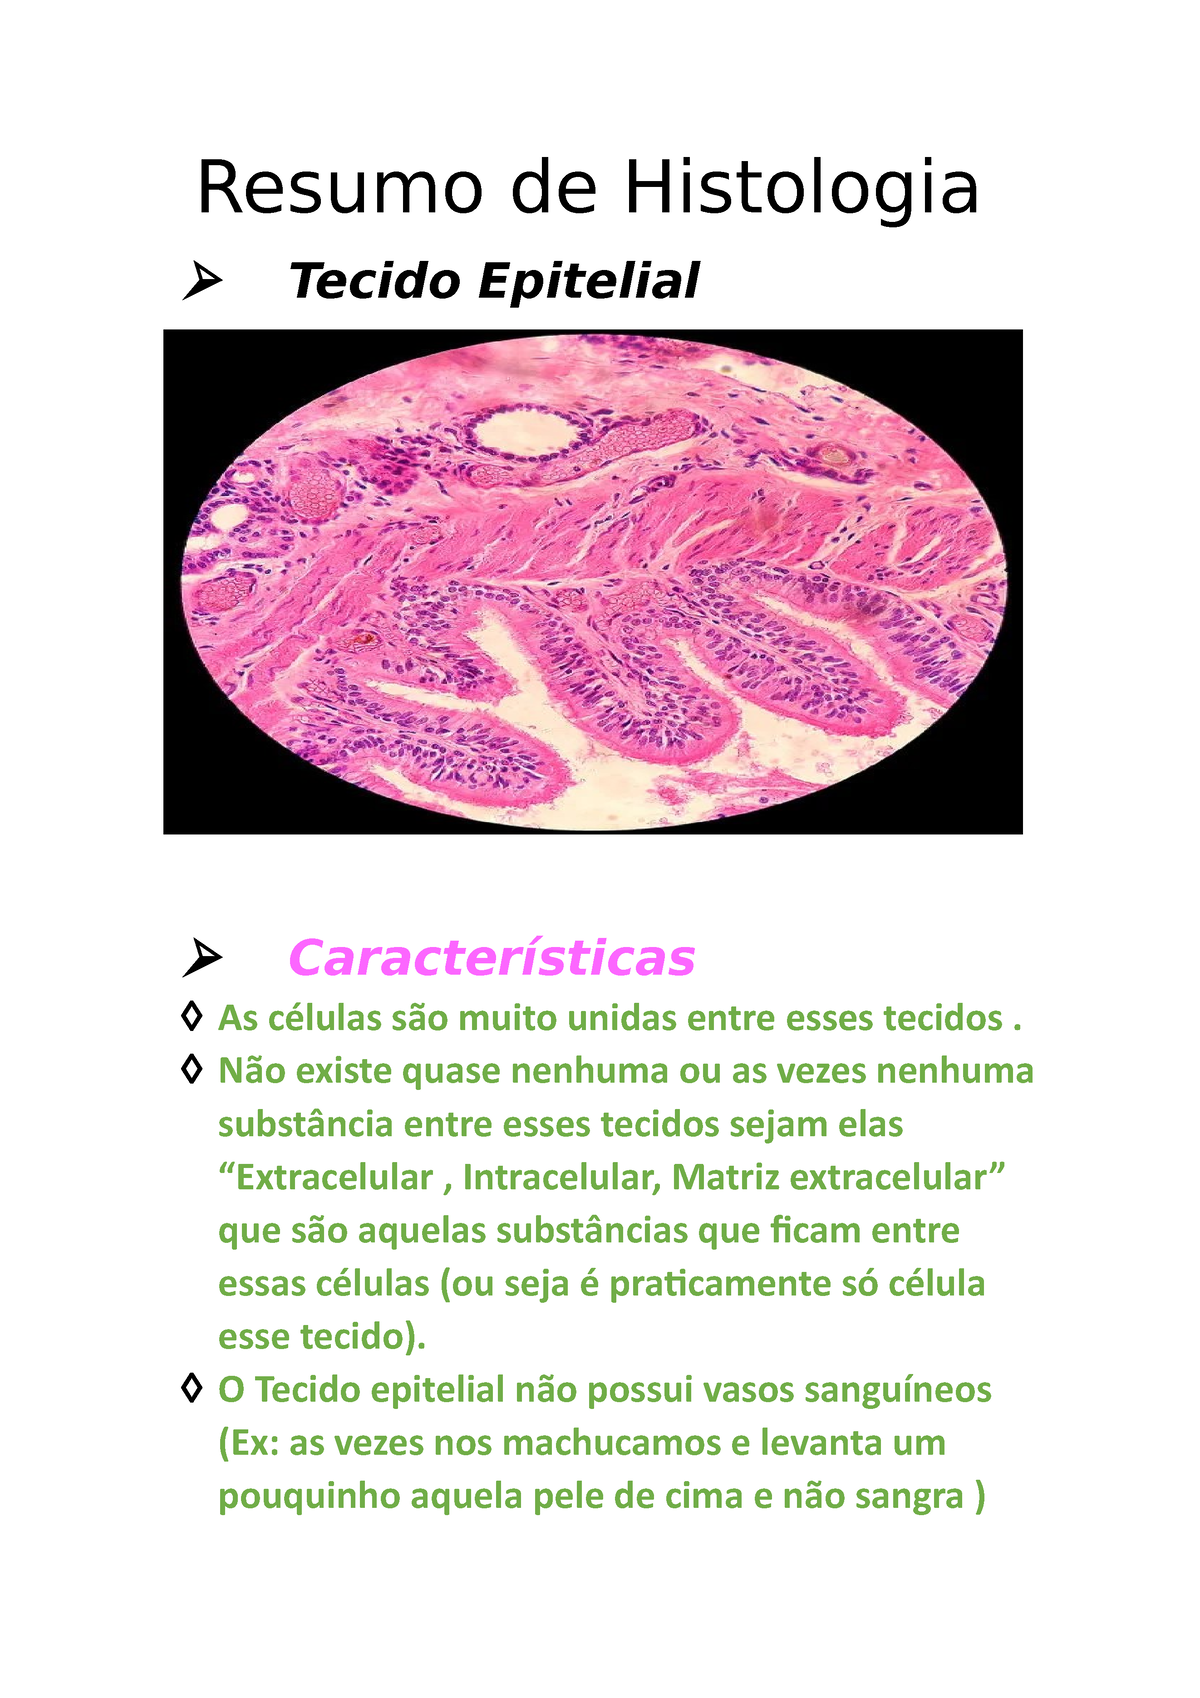 Tecido Glandular E Epitelial Resumo De Histologia Tecido Epitelial